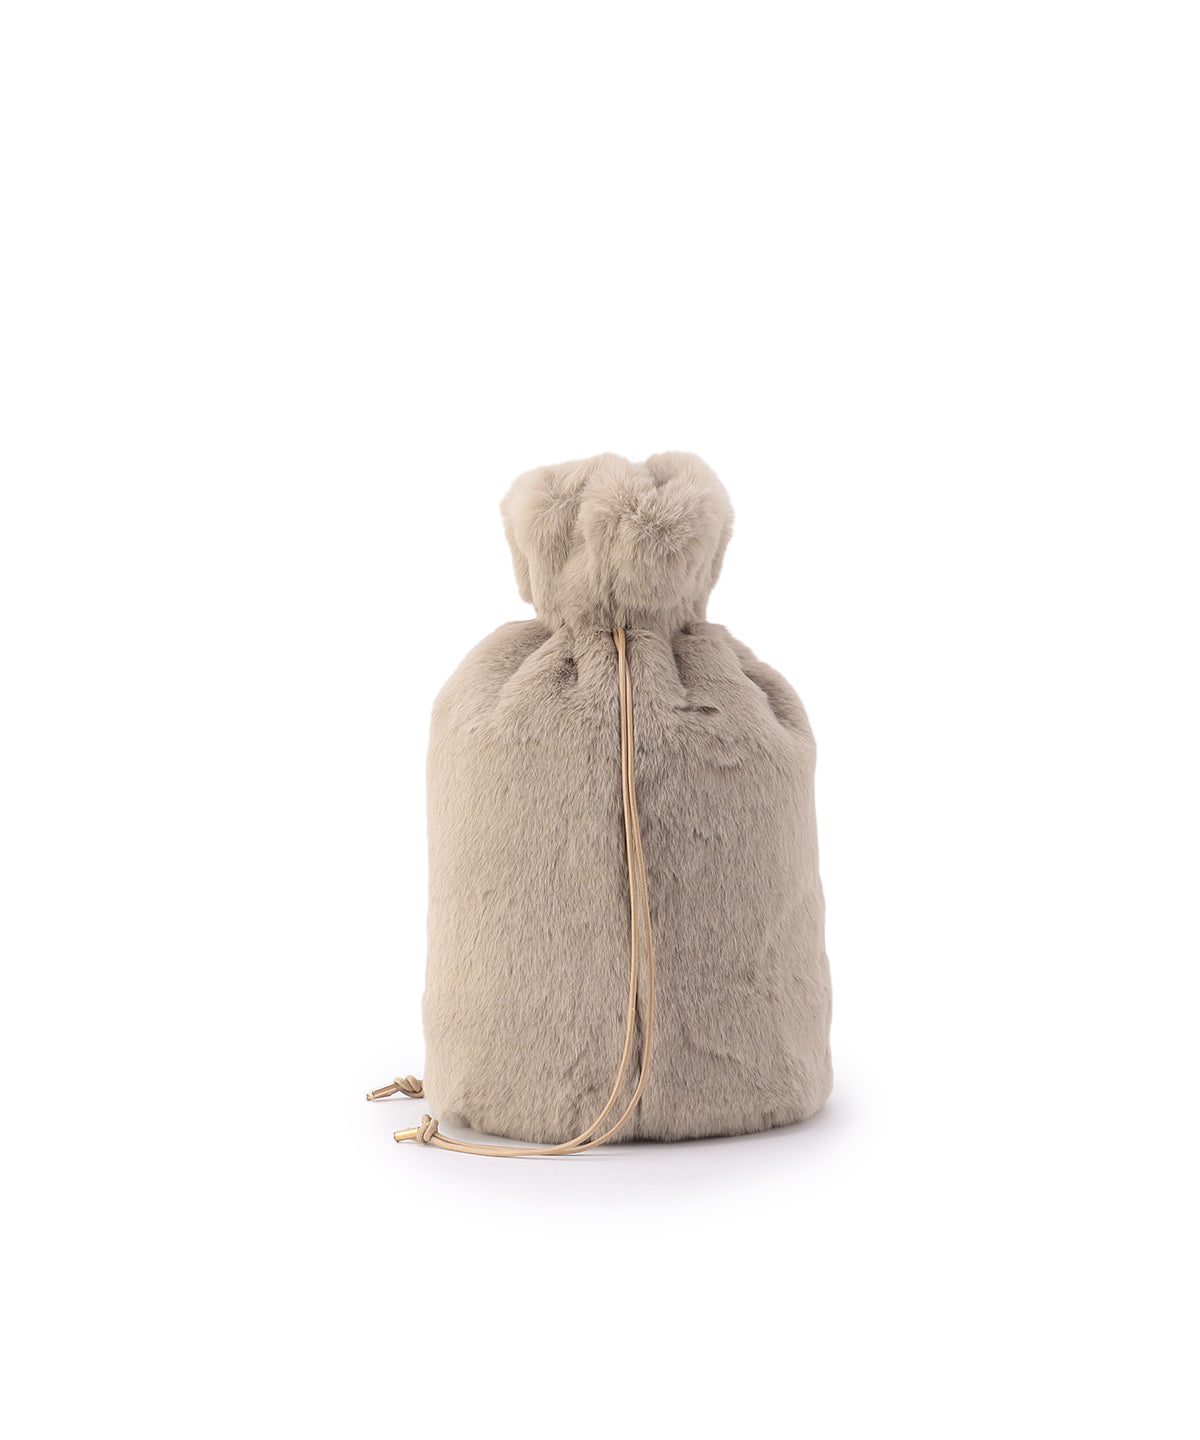 Eco Fur Drawstring Bag(Medium)BEIGE